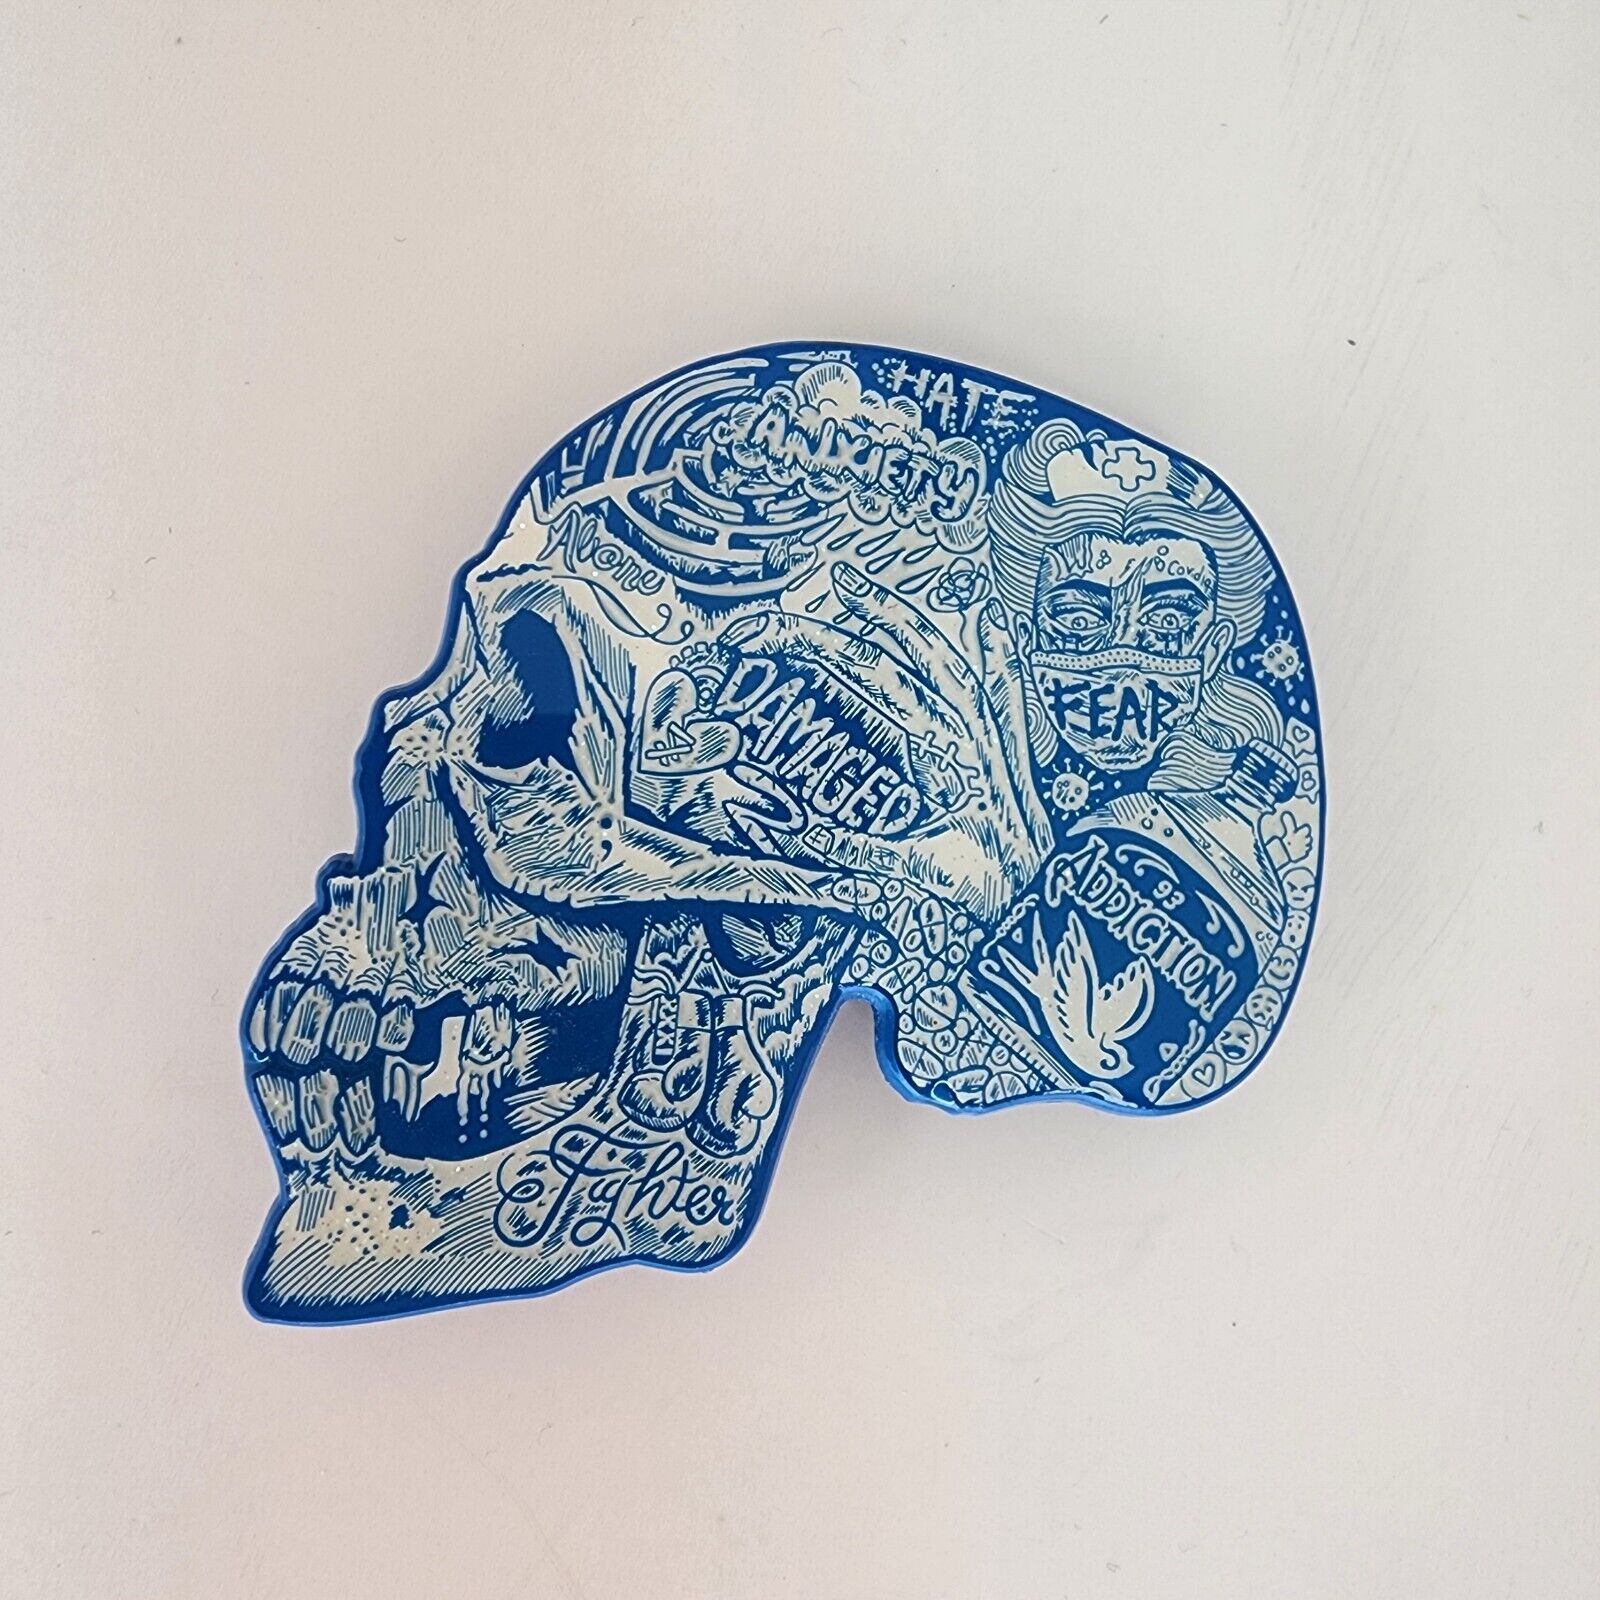 Little Sams Art Mental Health Skull Limited Edition Pin Very Rare Blue Variant